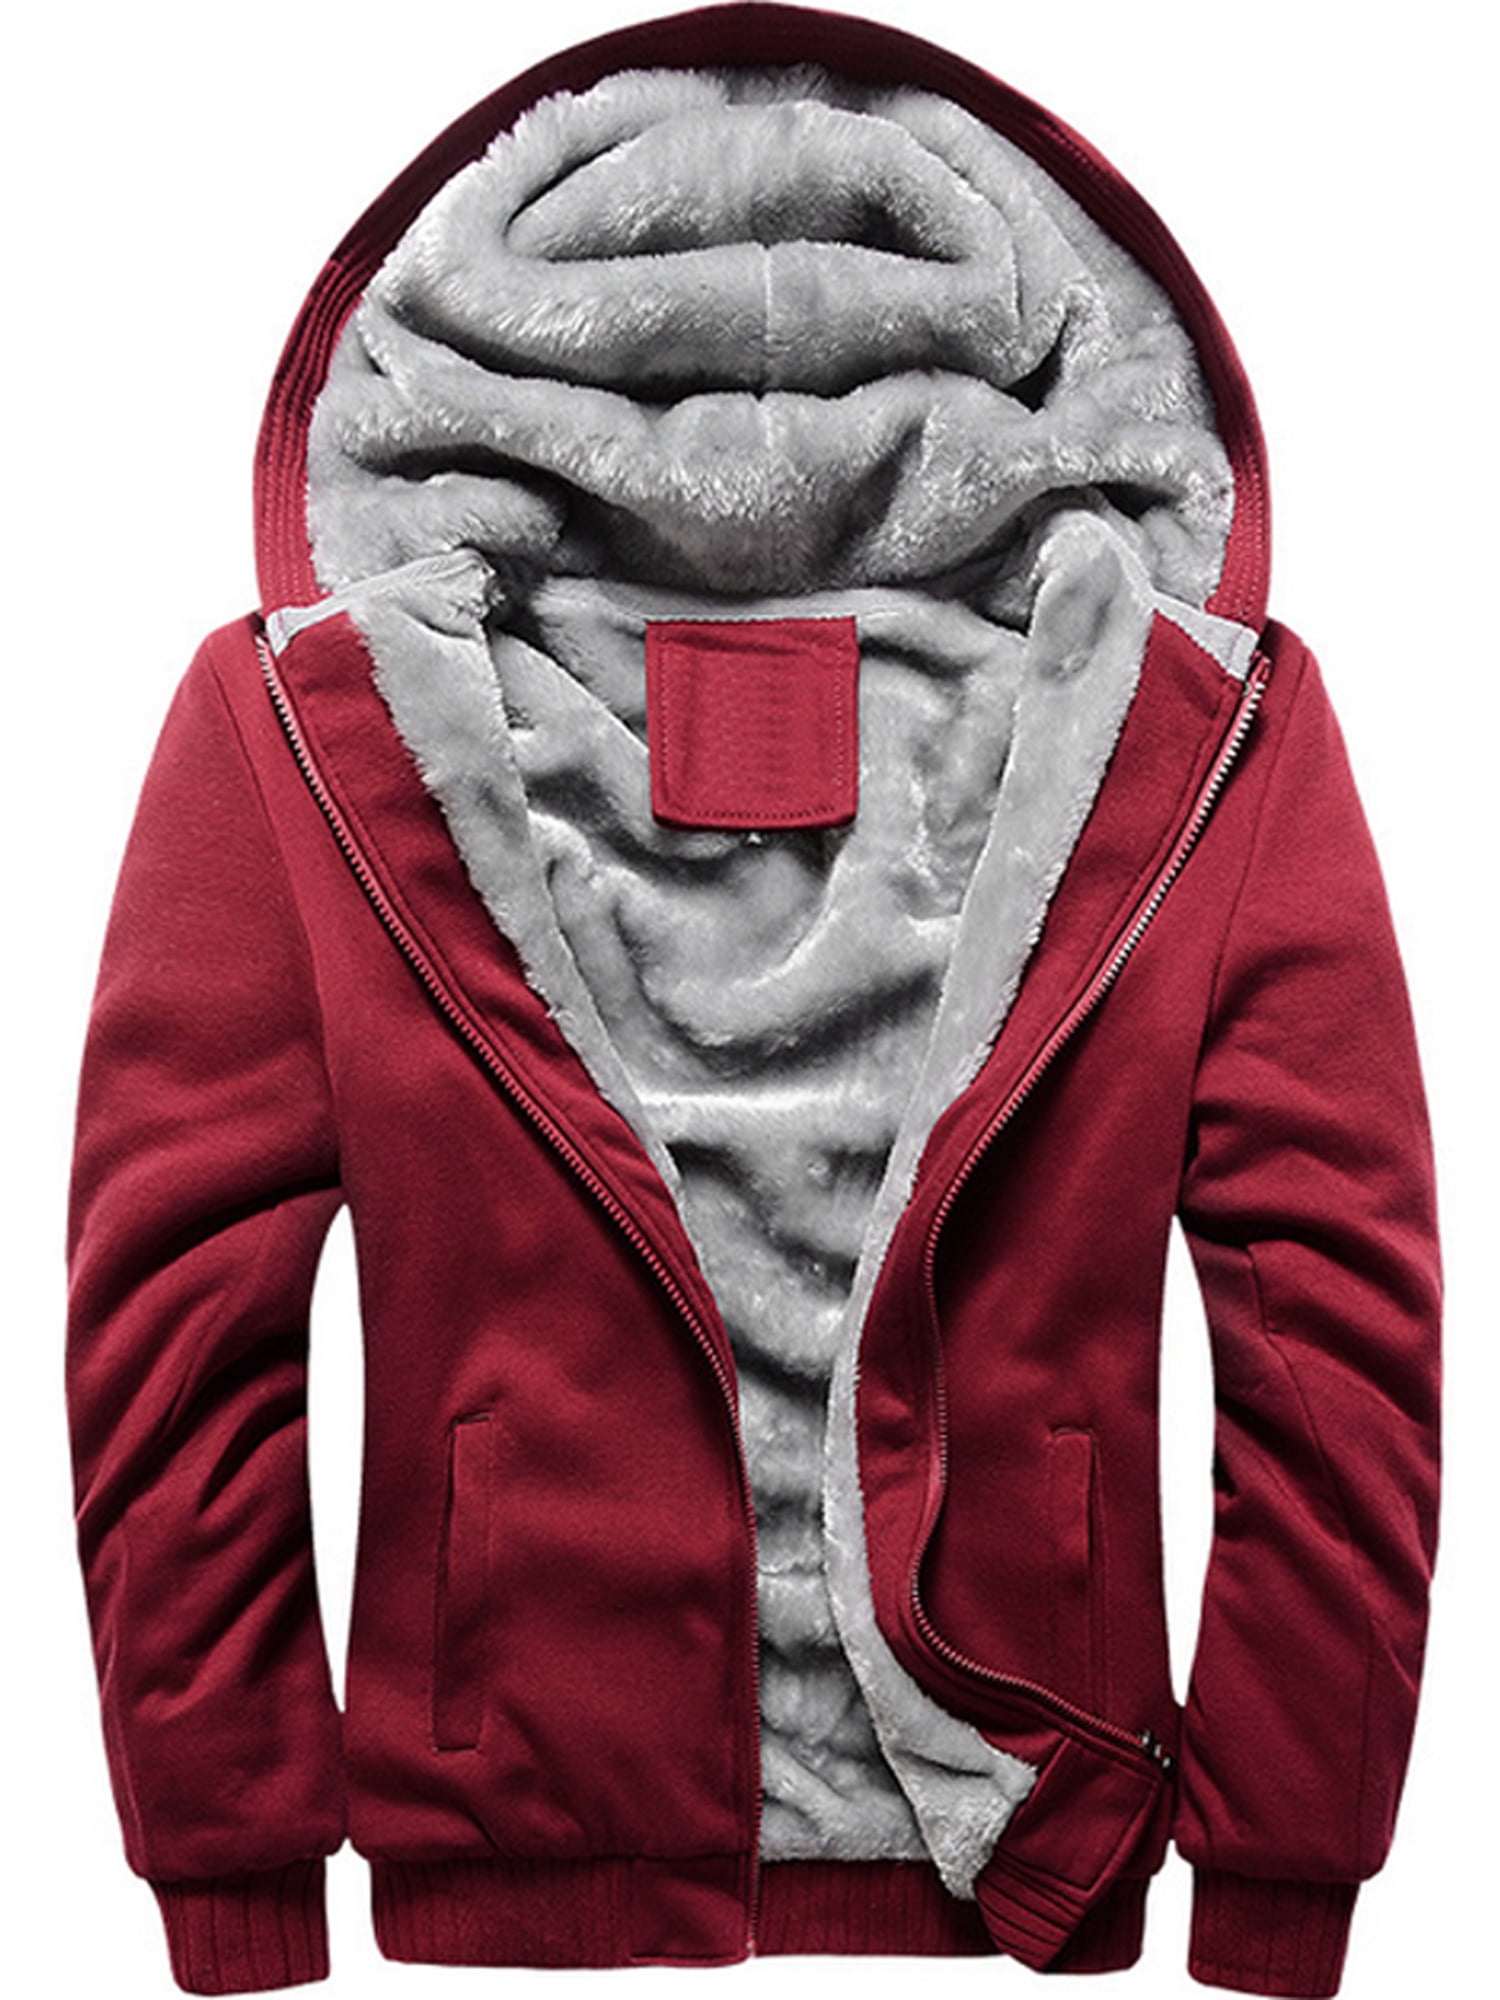 Men's Winter Warm Fleece Lined Hoodie Jacket Long Coat Zip Up Hooded Outerwear